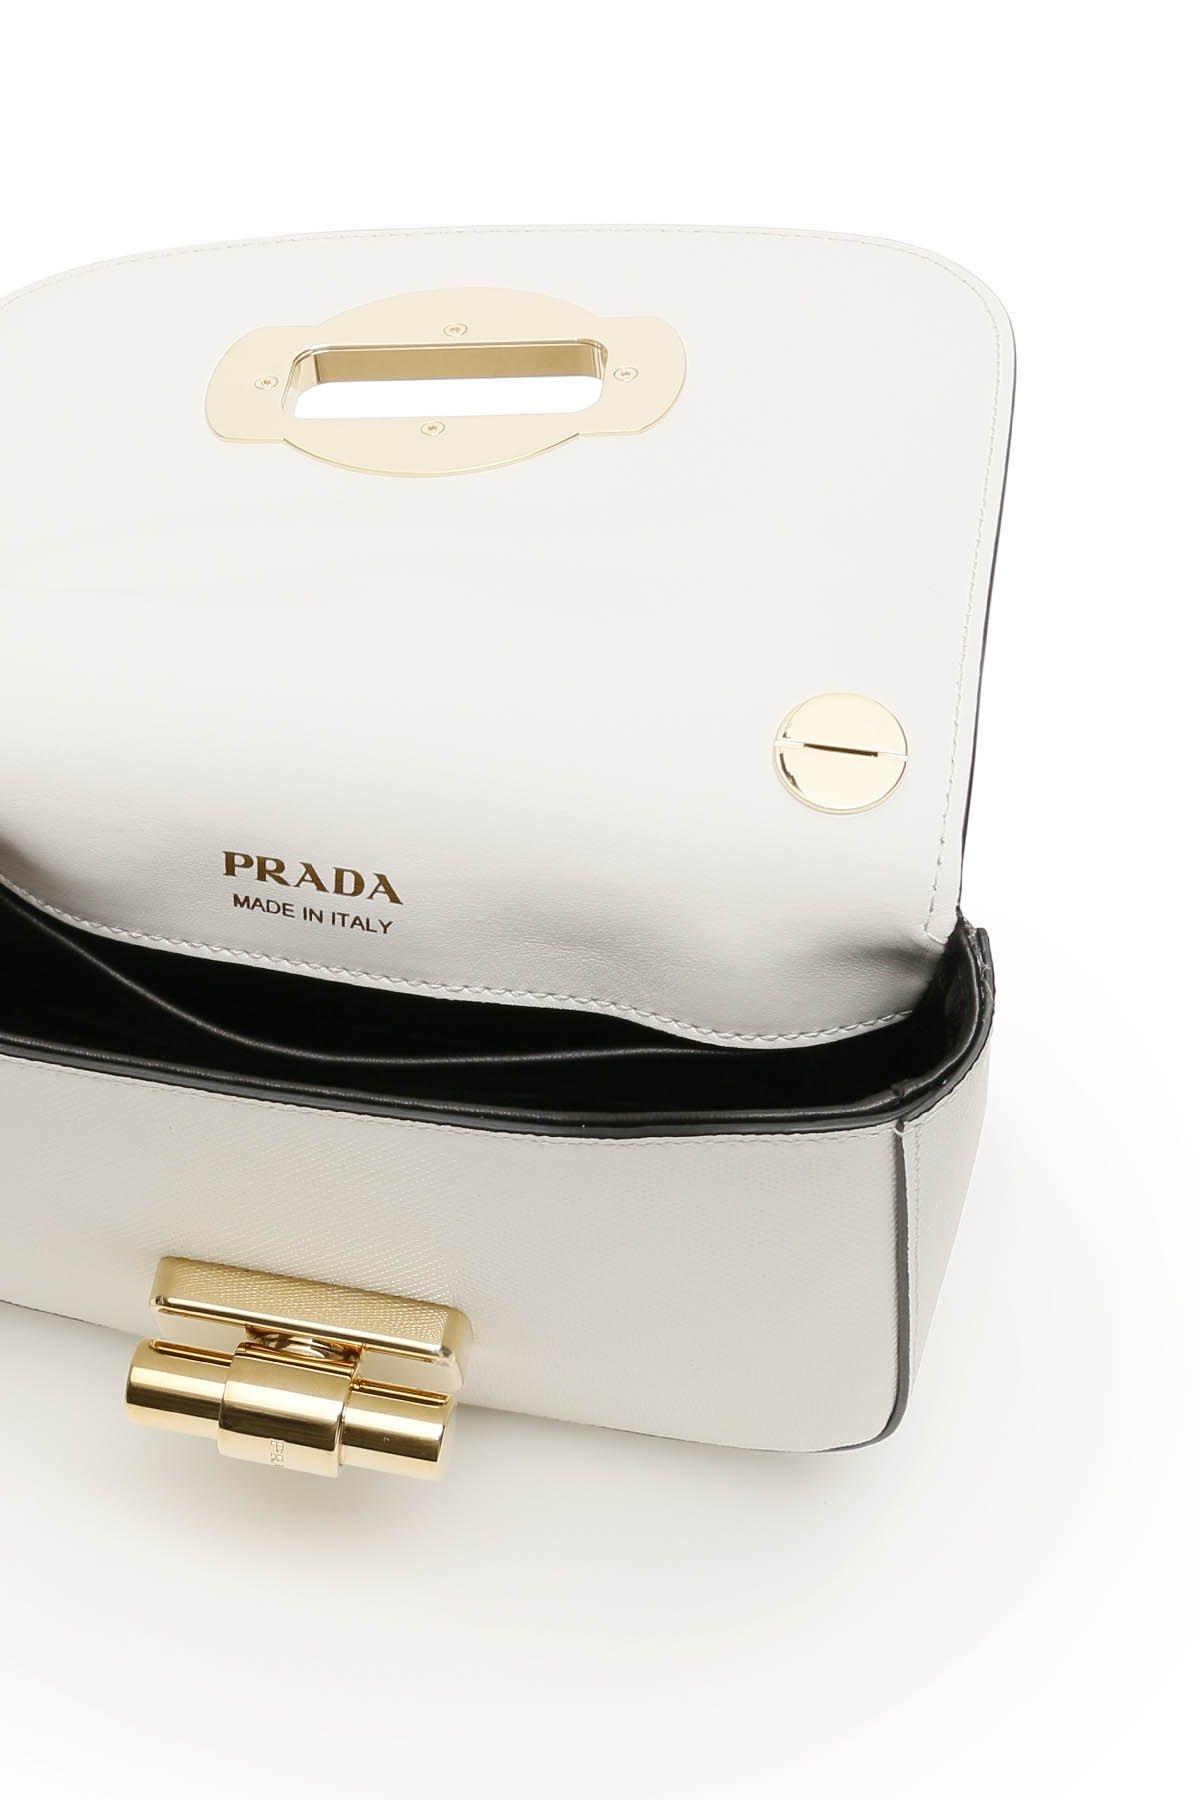 Prada Flap Lock Details Shoulder Bag